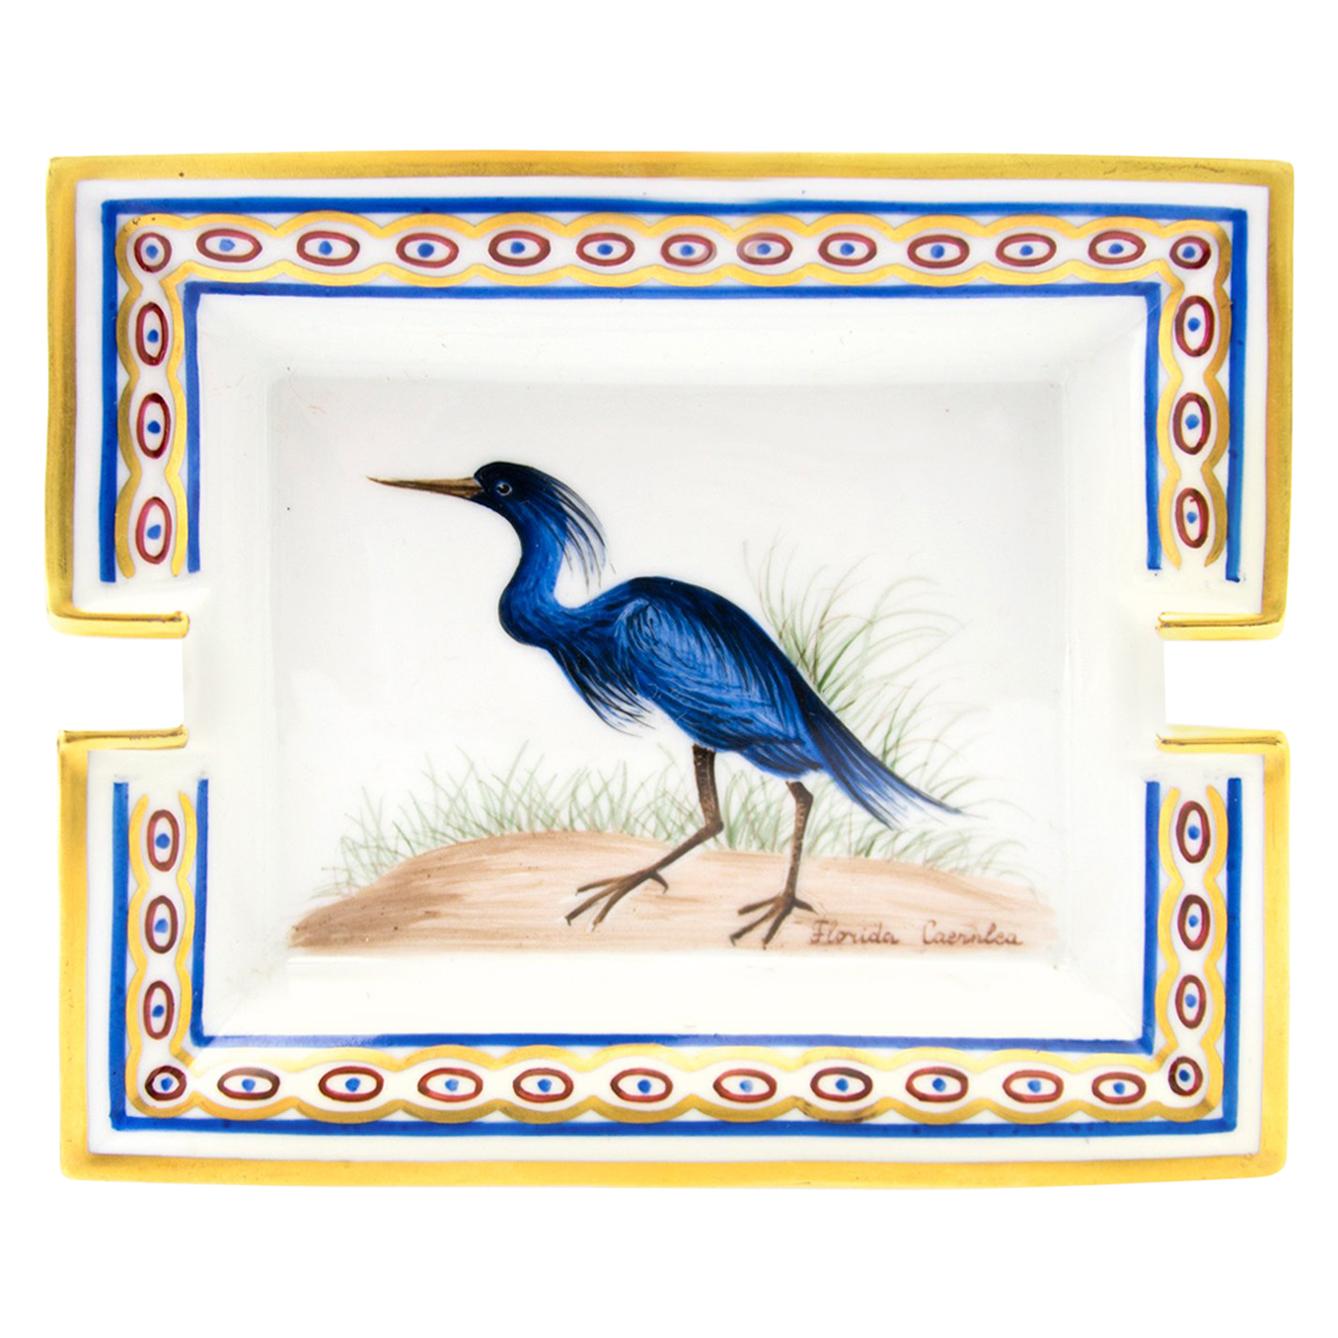 Hermès Ashtray Blue Bird 'Florida Caerulea'